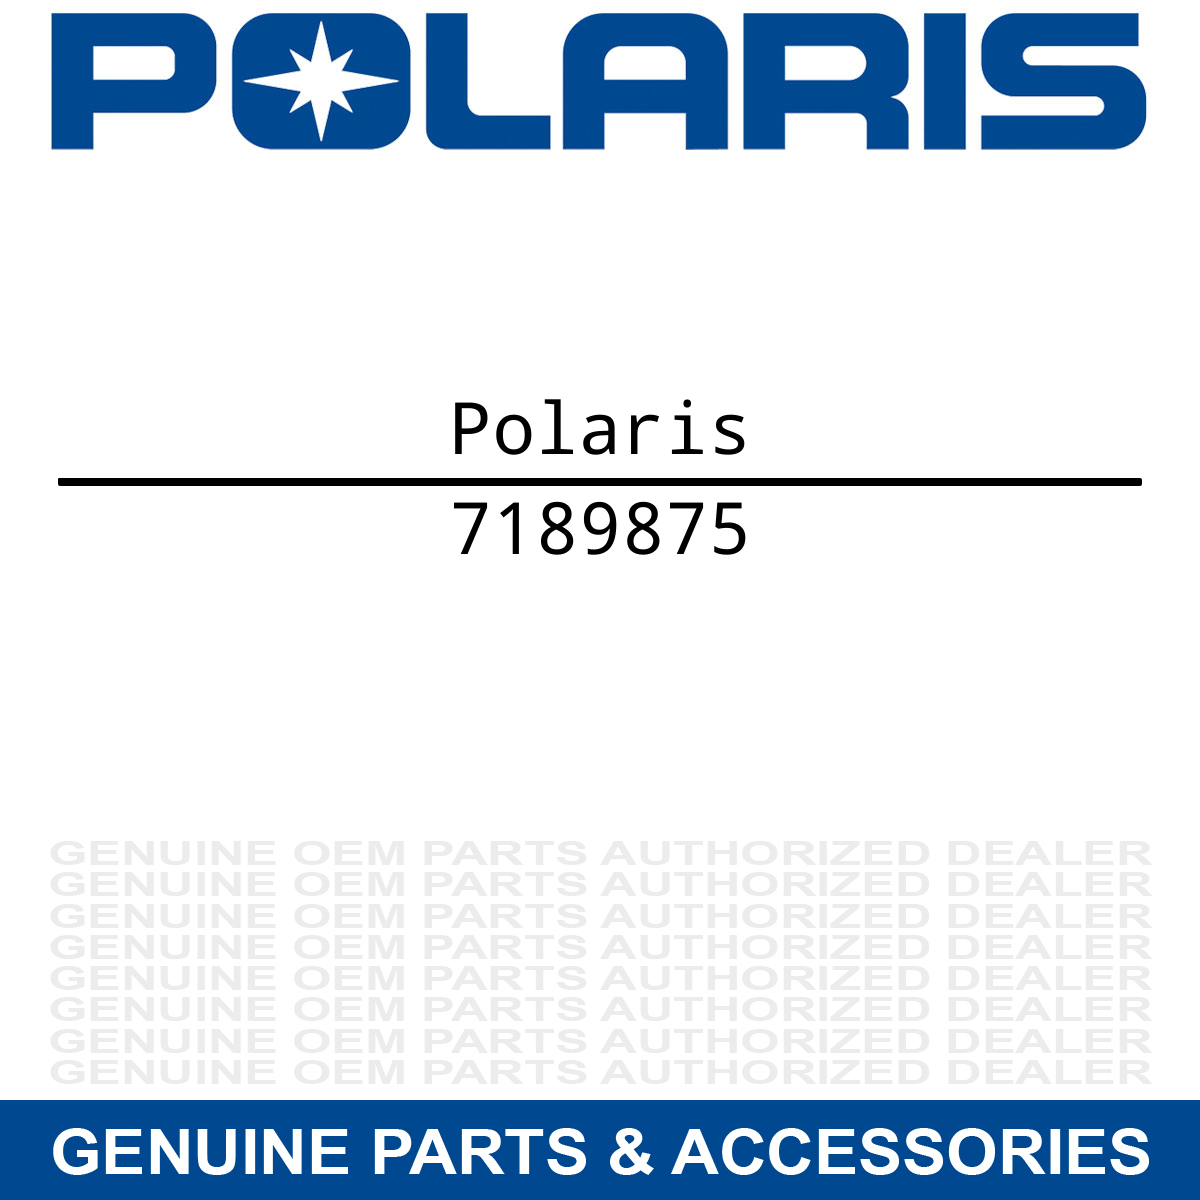 Polaris 7189875 Right Hand "Polaris" Side Panel Decal